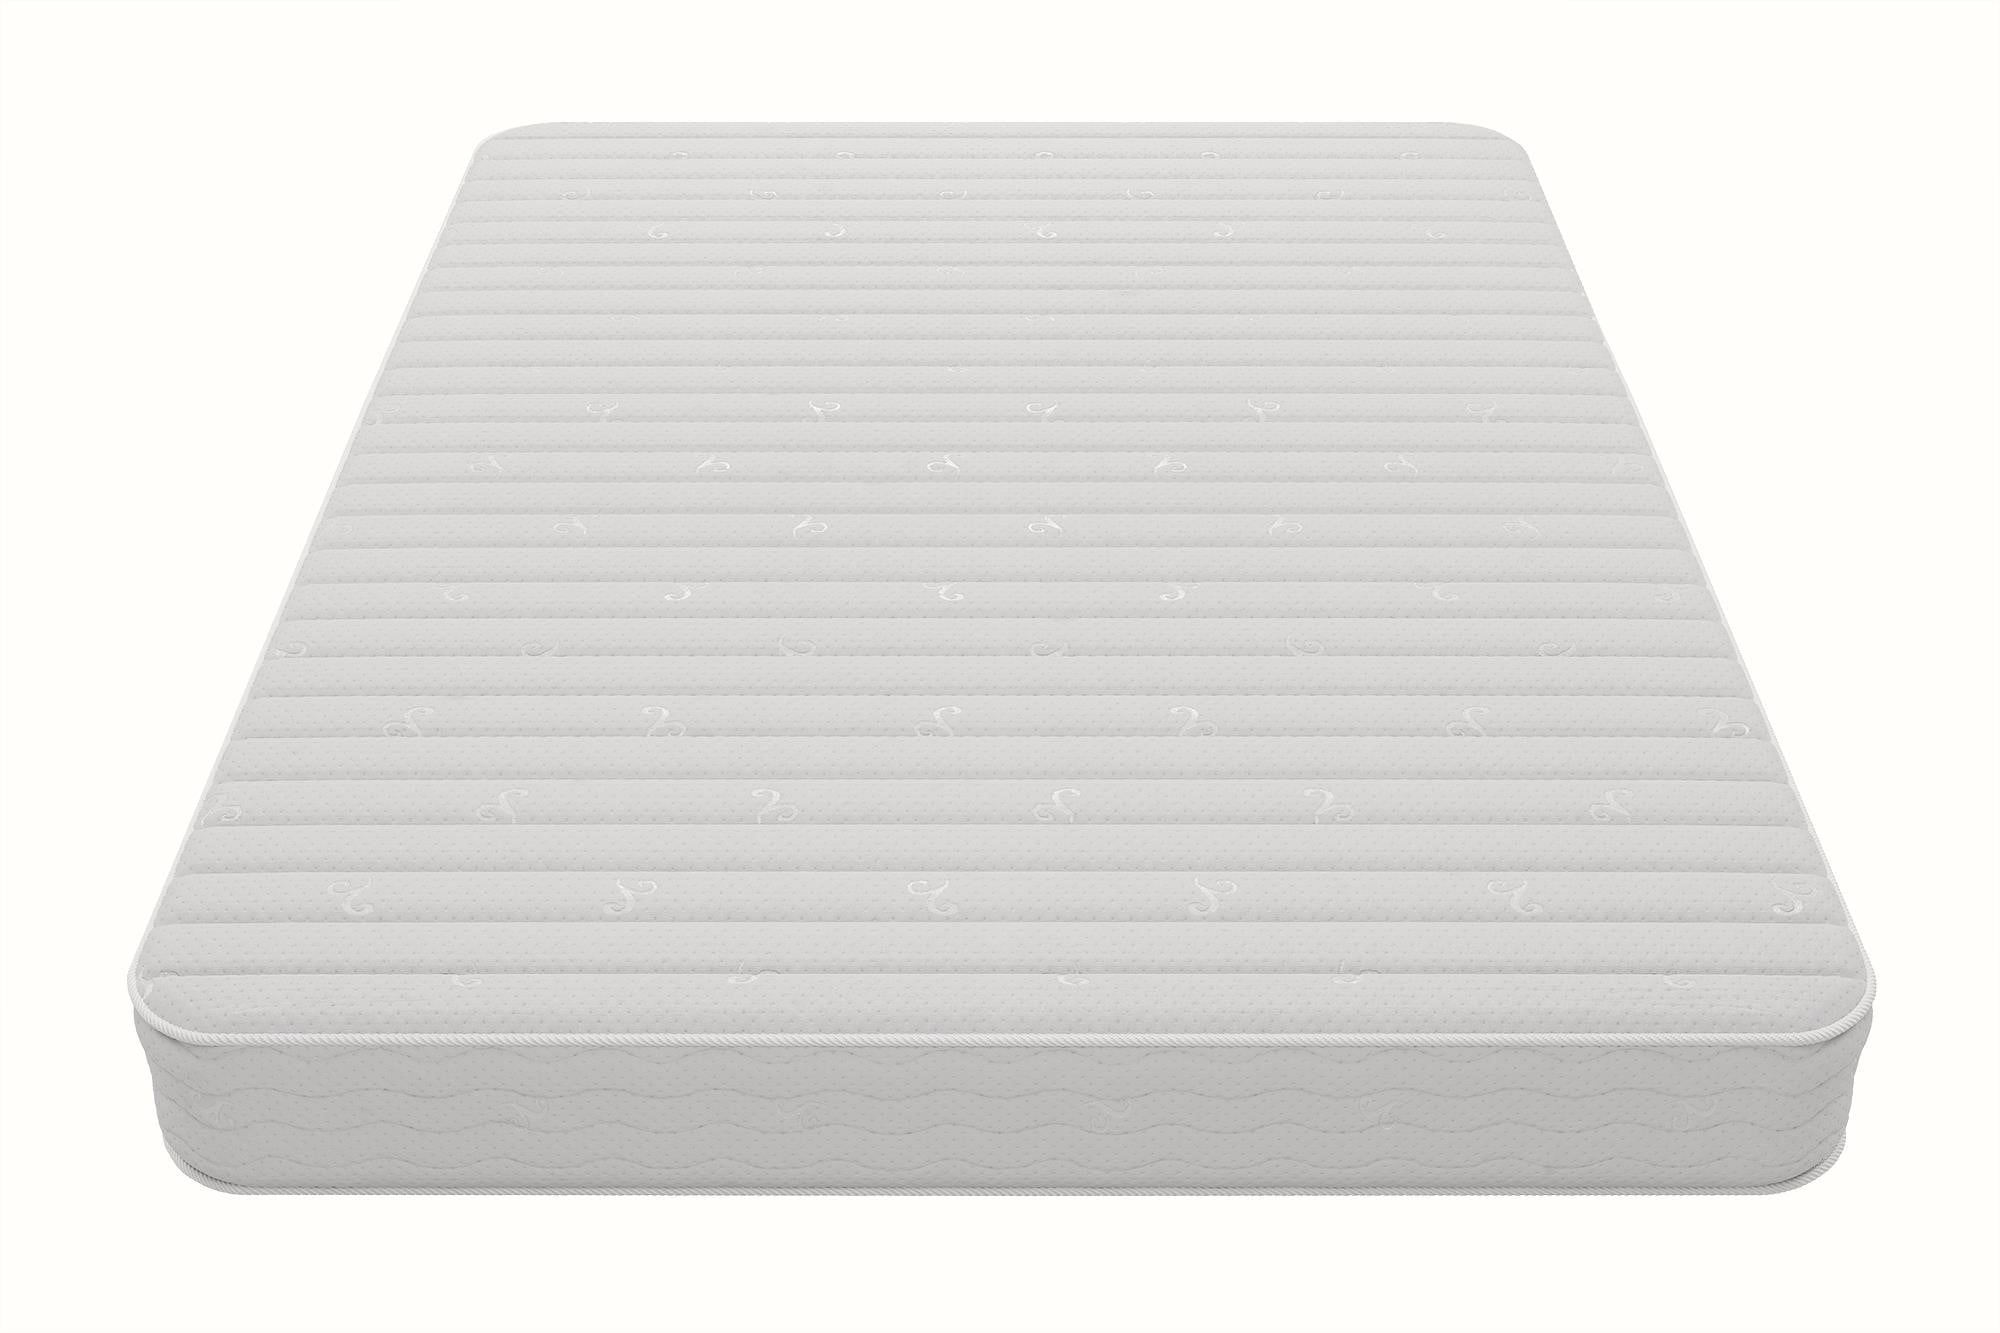 contour 8 signature sleep mattress in full size